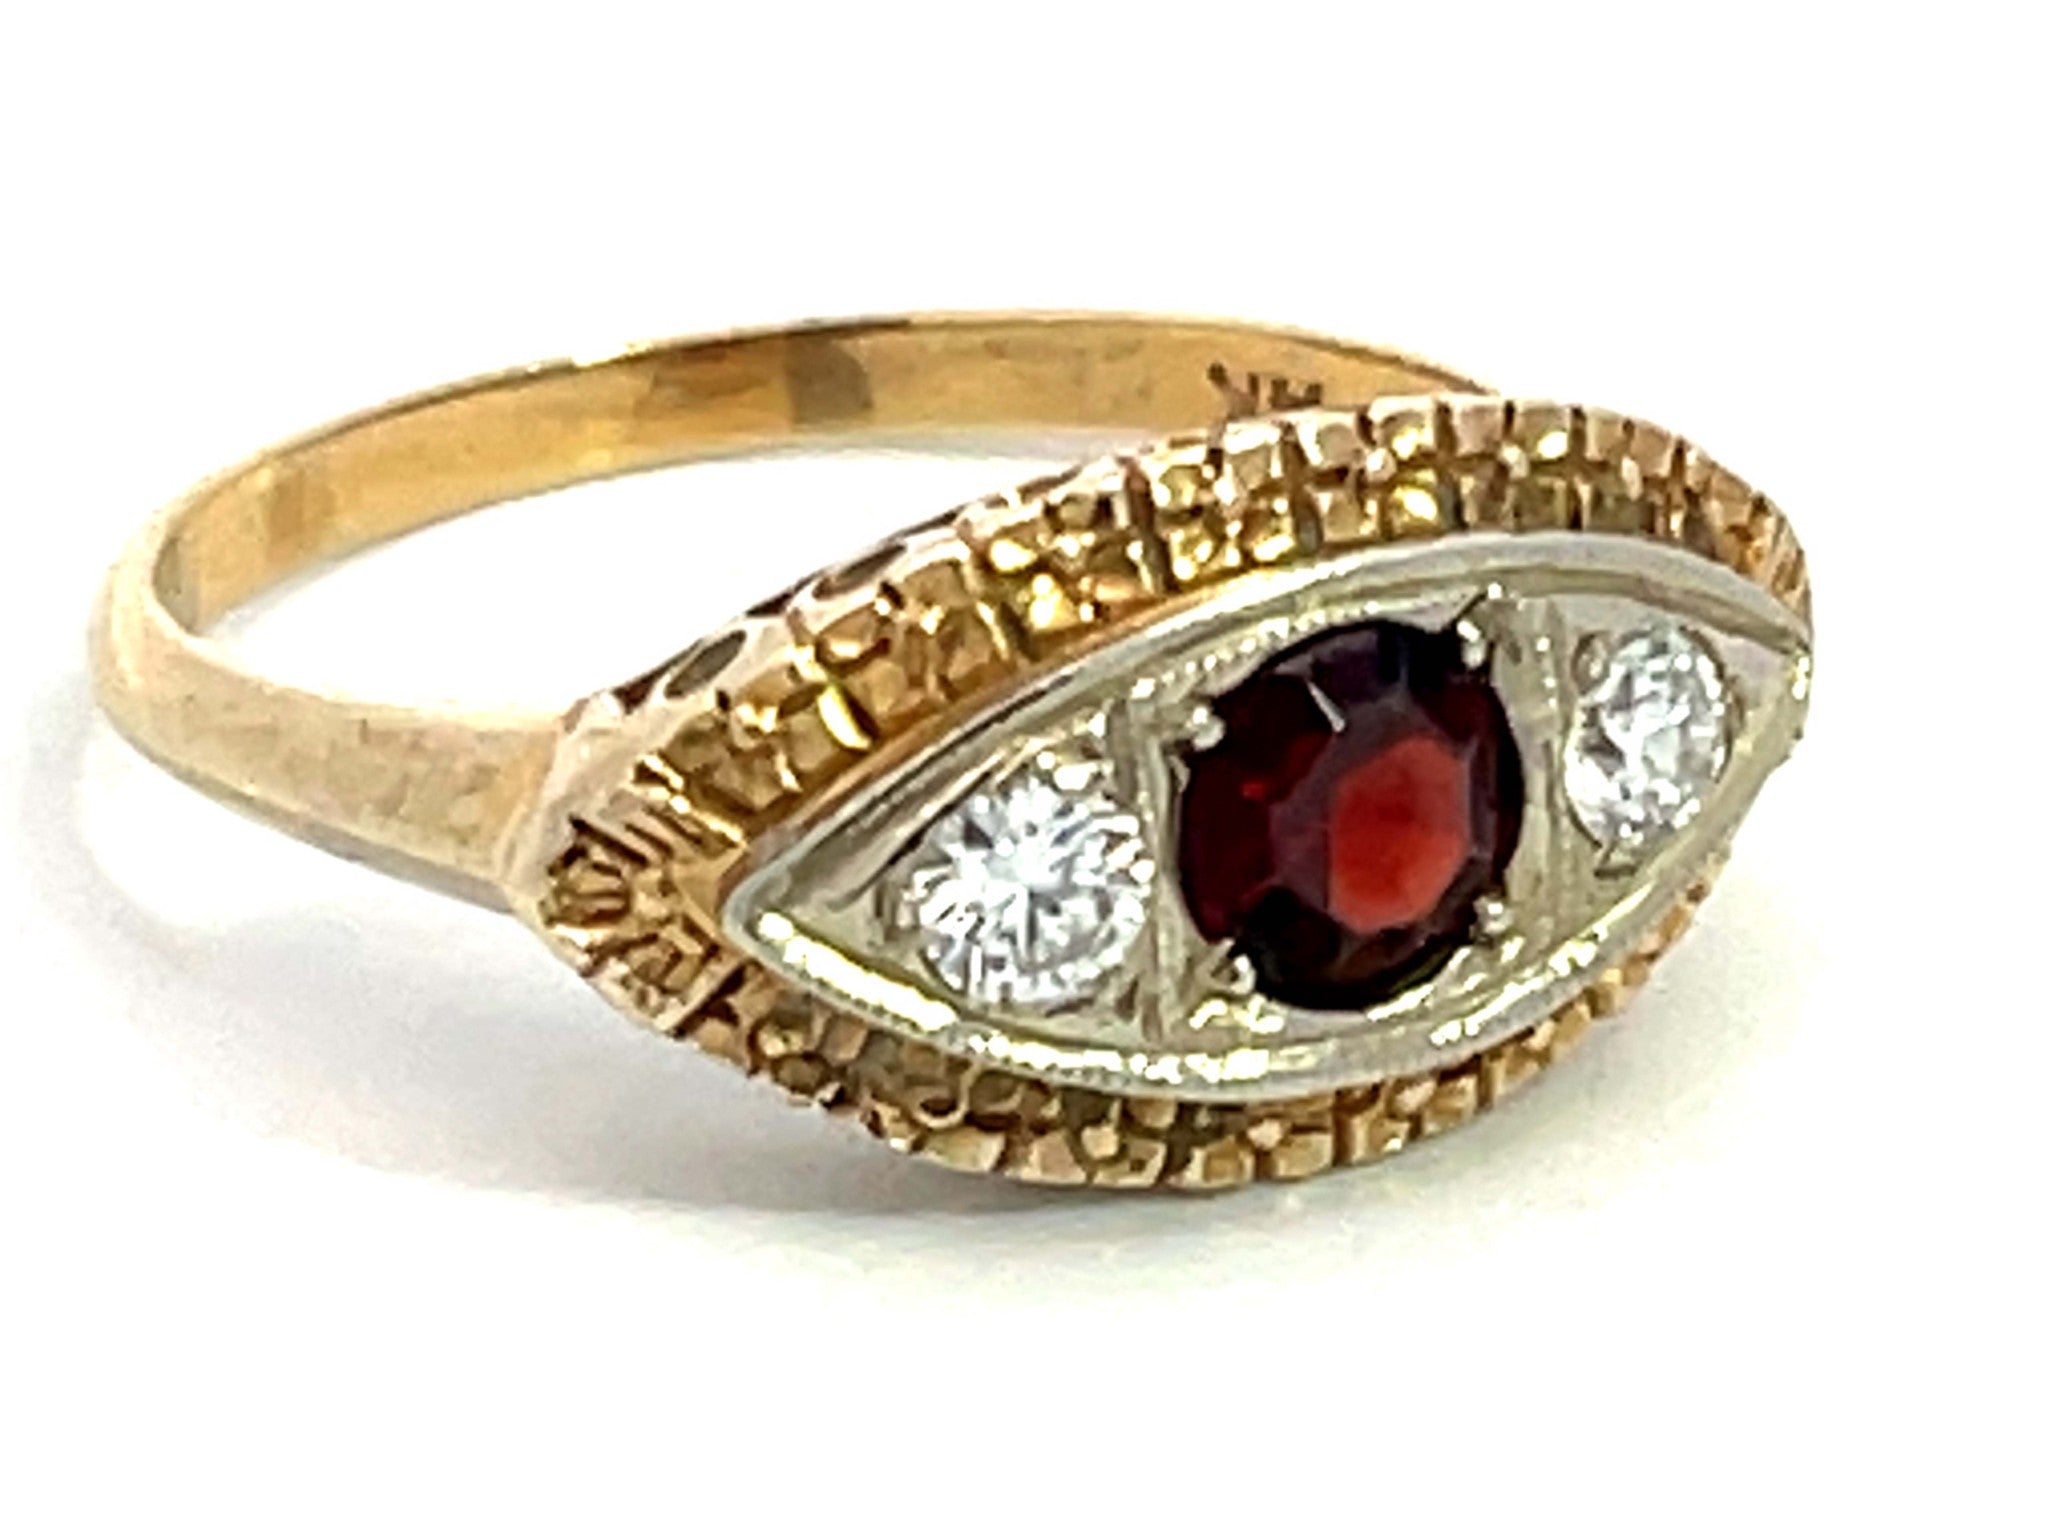 Art Deco Rubellite Garnet and Diamond Eye Ring in 14k Yellow Gold